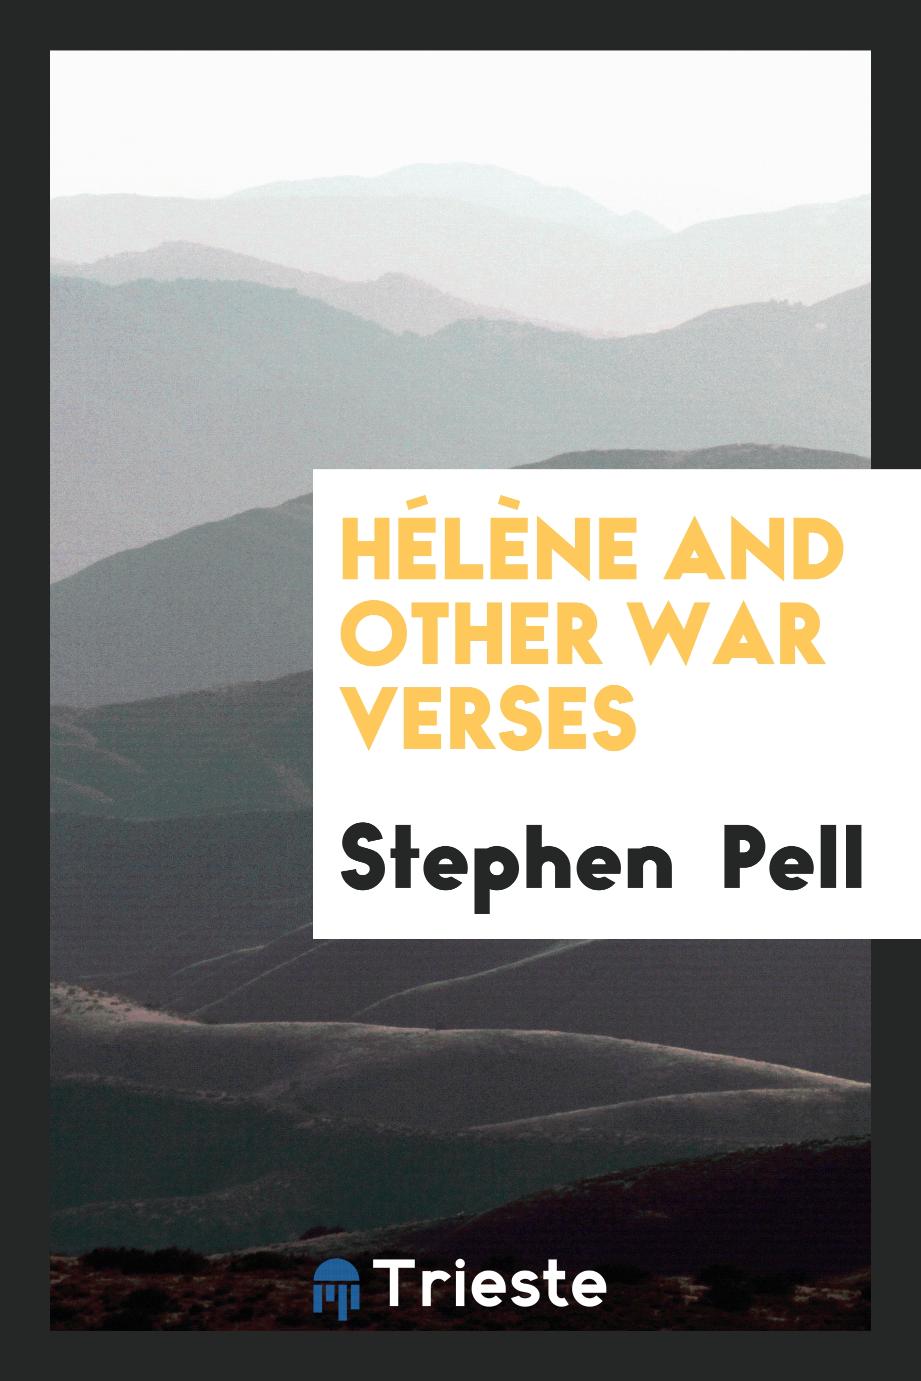 Hélène and Other War Verses